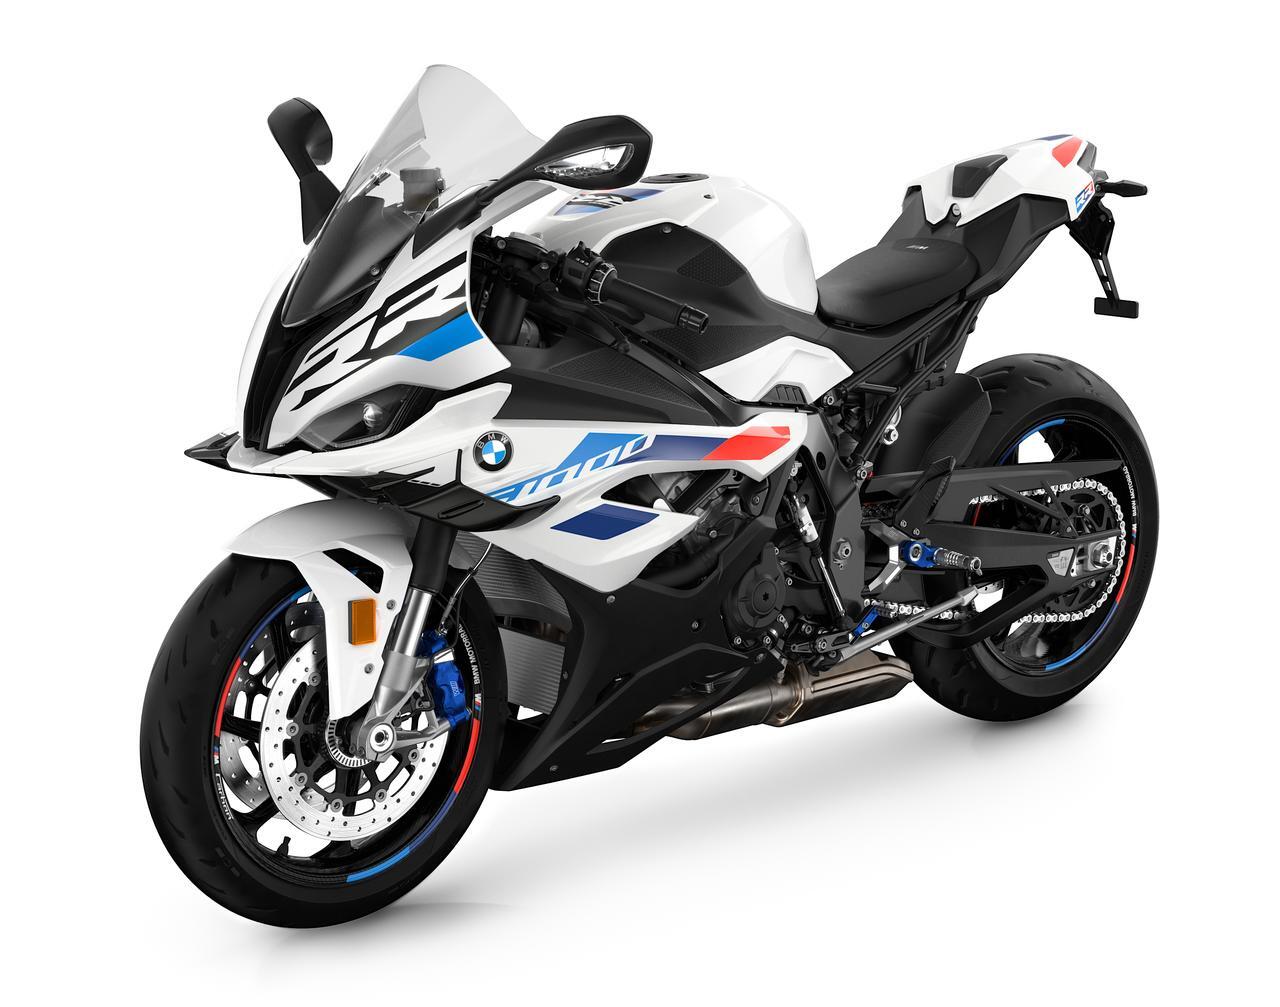 Bridgestone BATTLAX HYPERSPORT S22 Premium Motorcycle Sports Tires Selected  as Original Equipment on New BMW S 1000 RR News